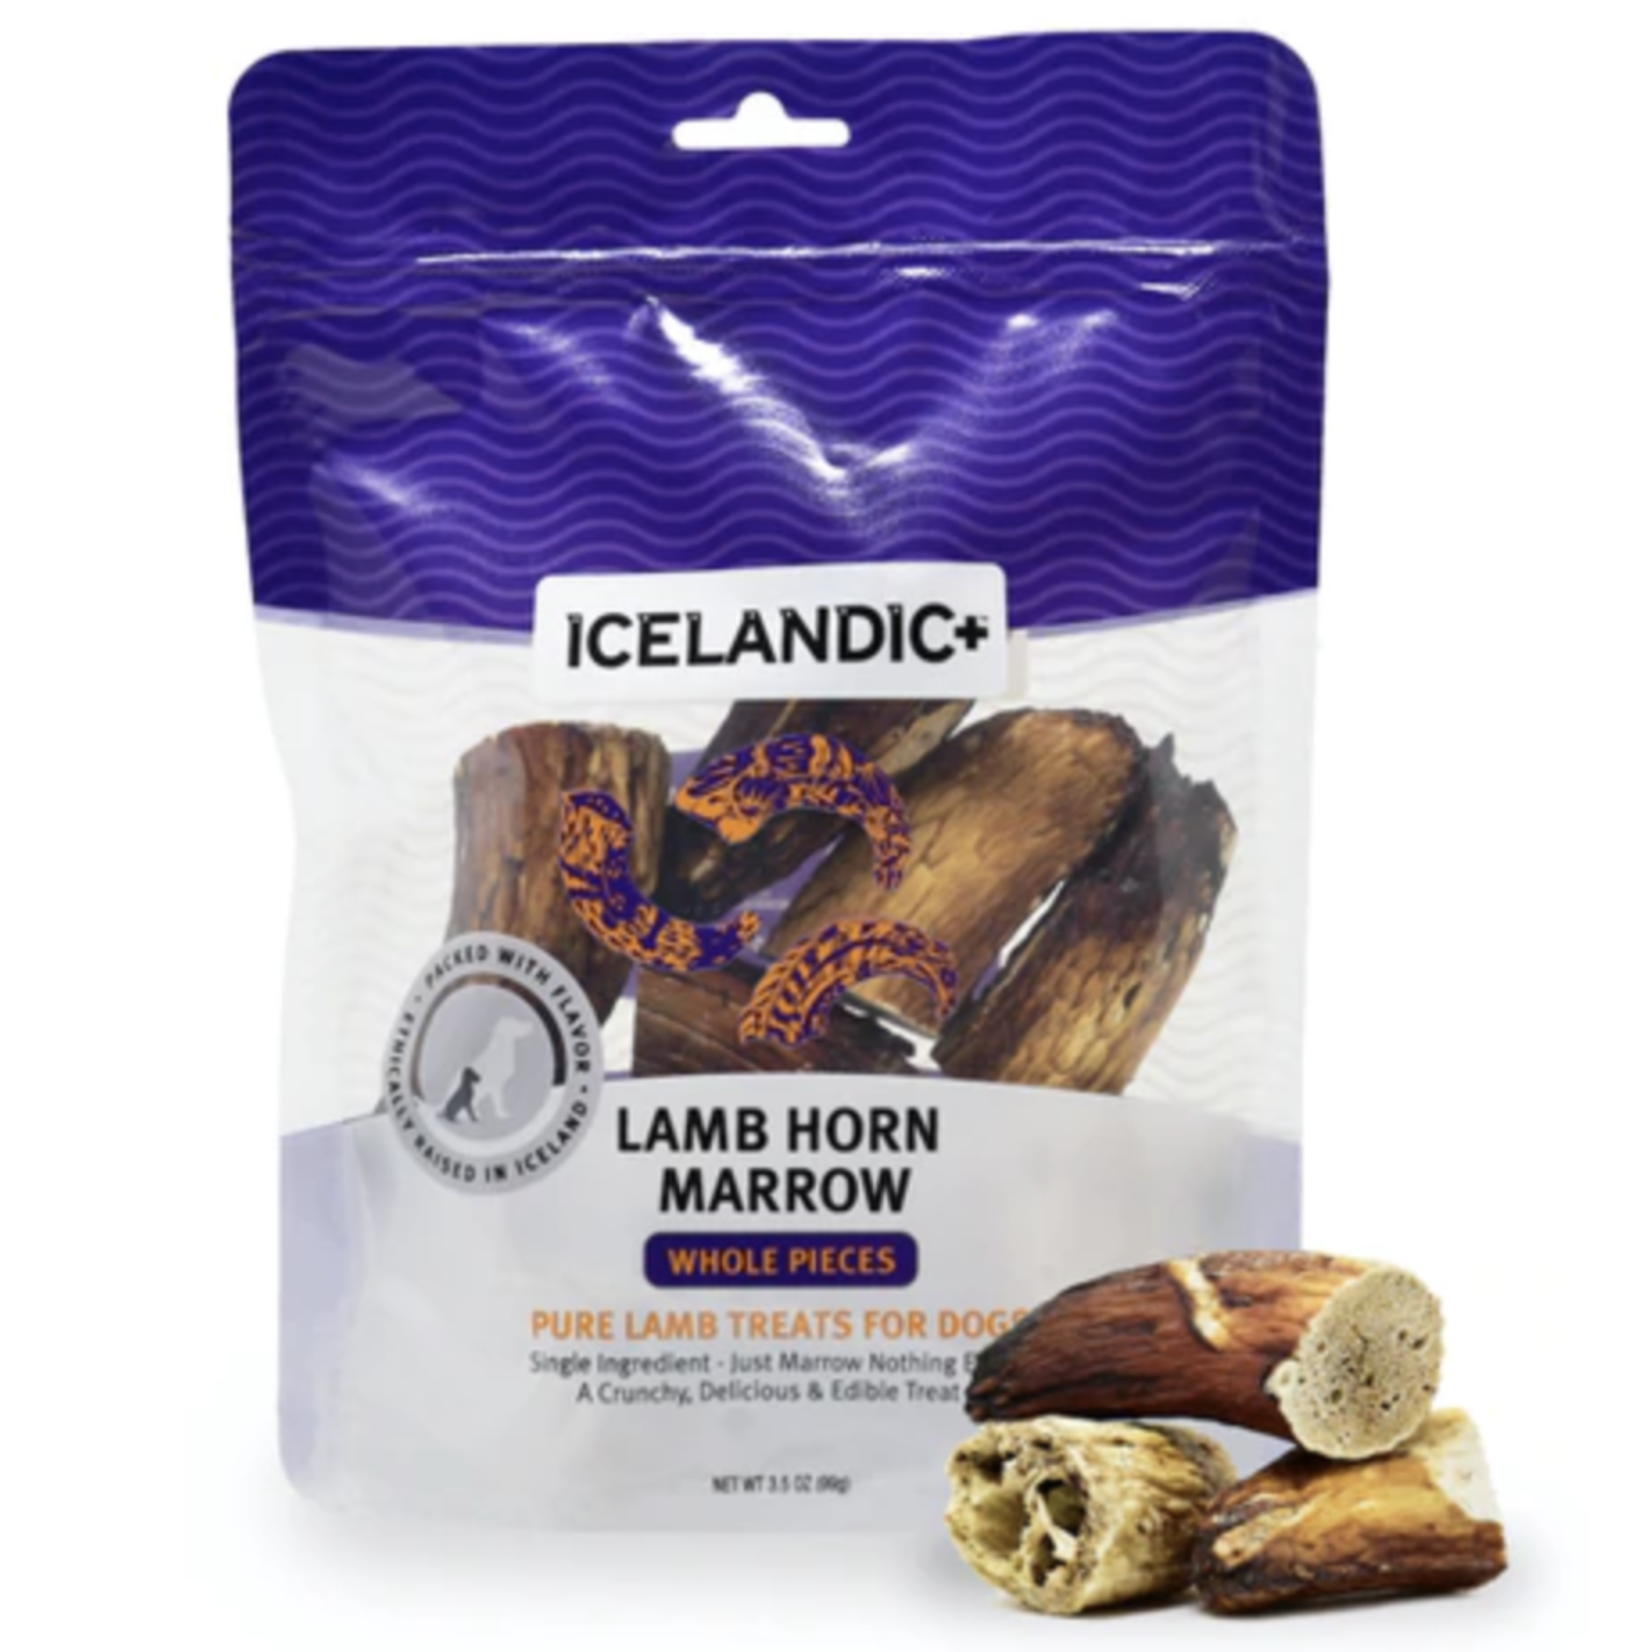 Icelandic+ Icelandic+ Lamb Horn Marrow Pieces 128g